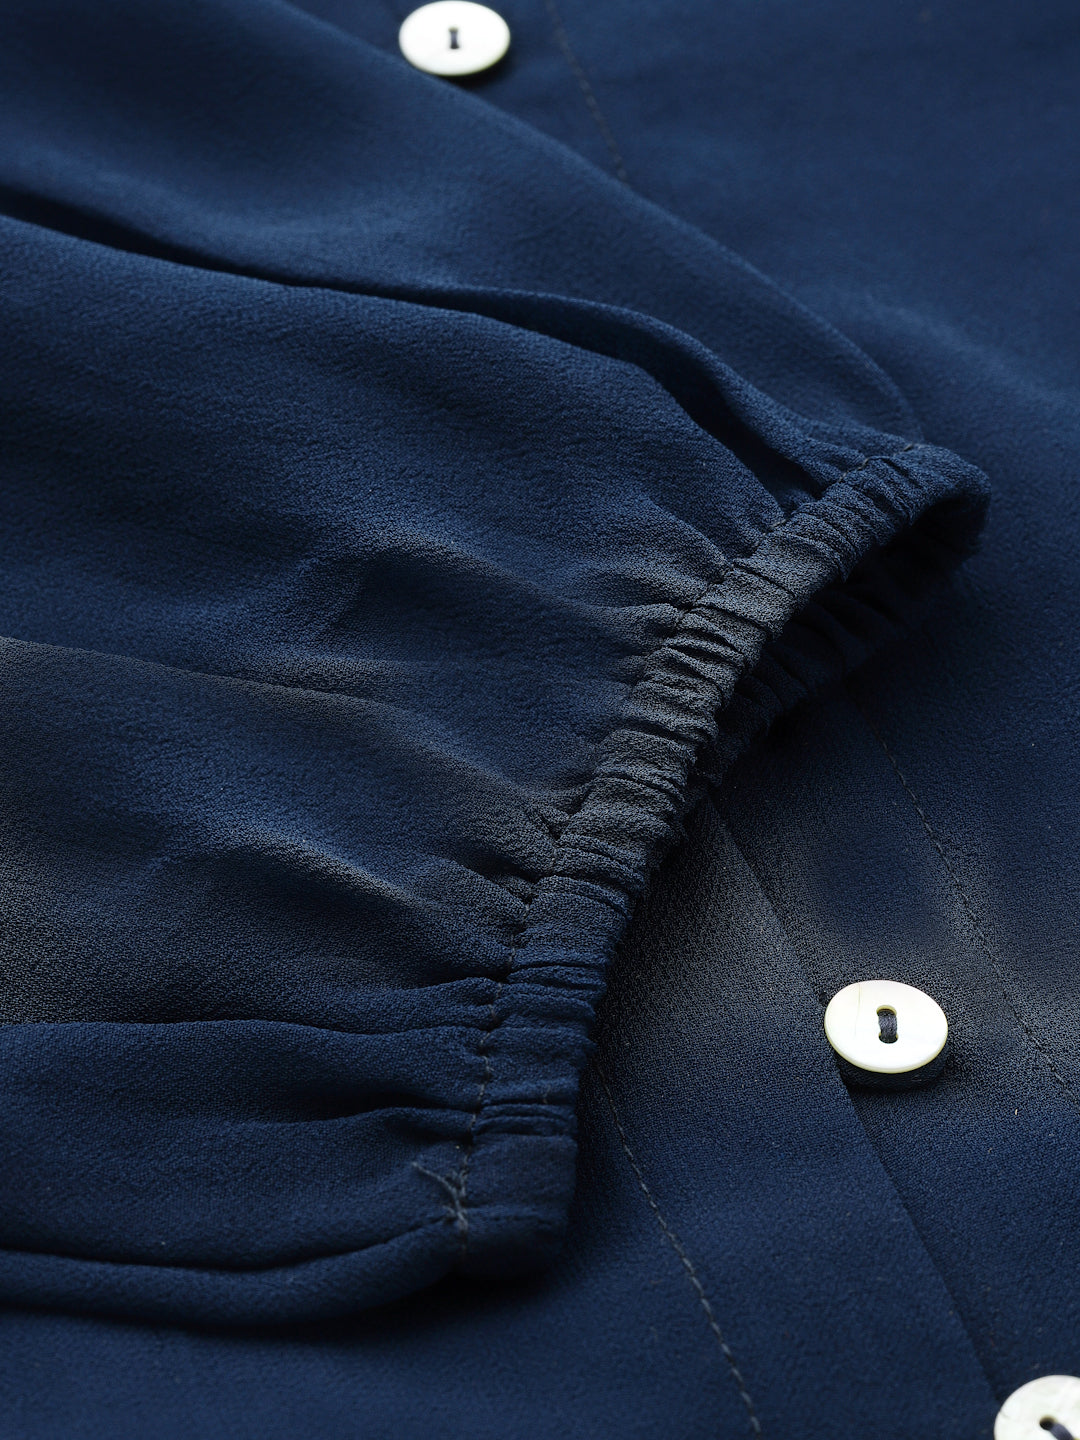 Valbone Women's Navy Blue Georgette Button Closure Top Full-Sleeves